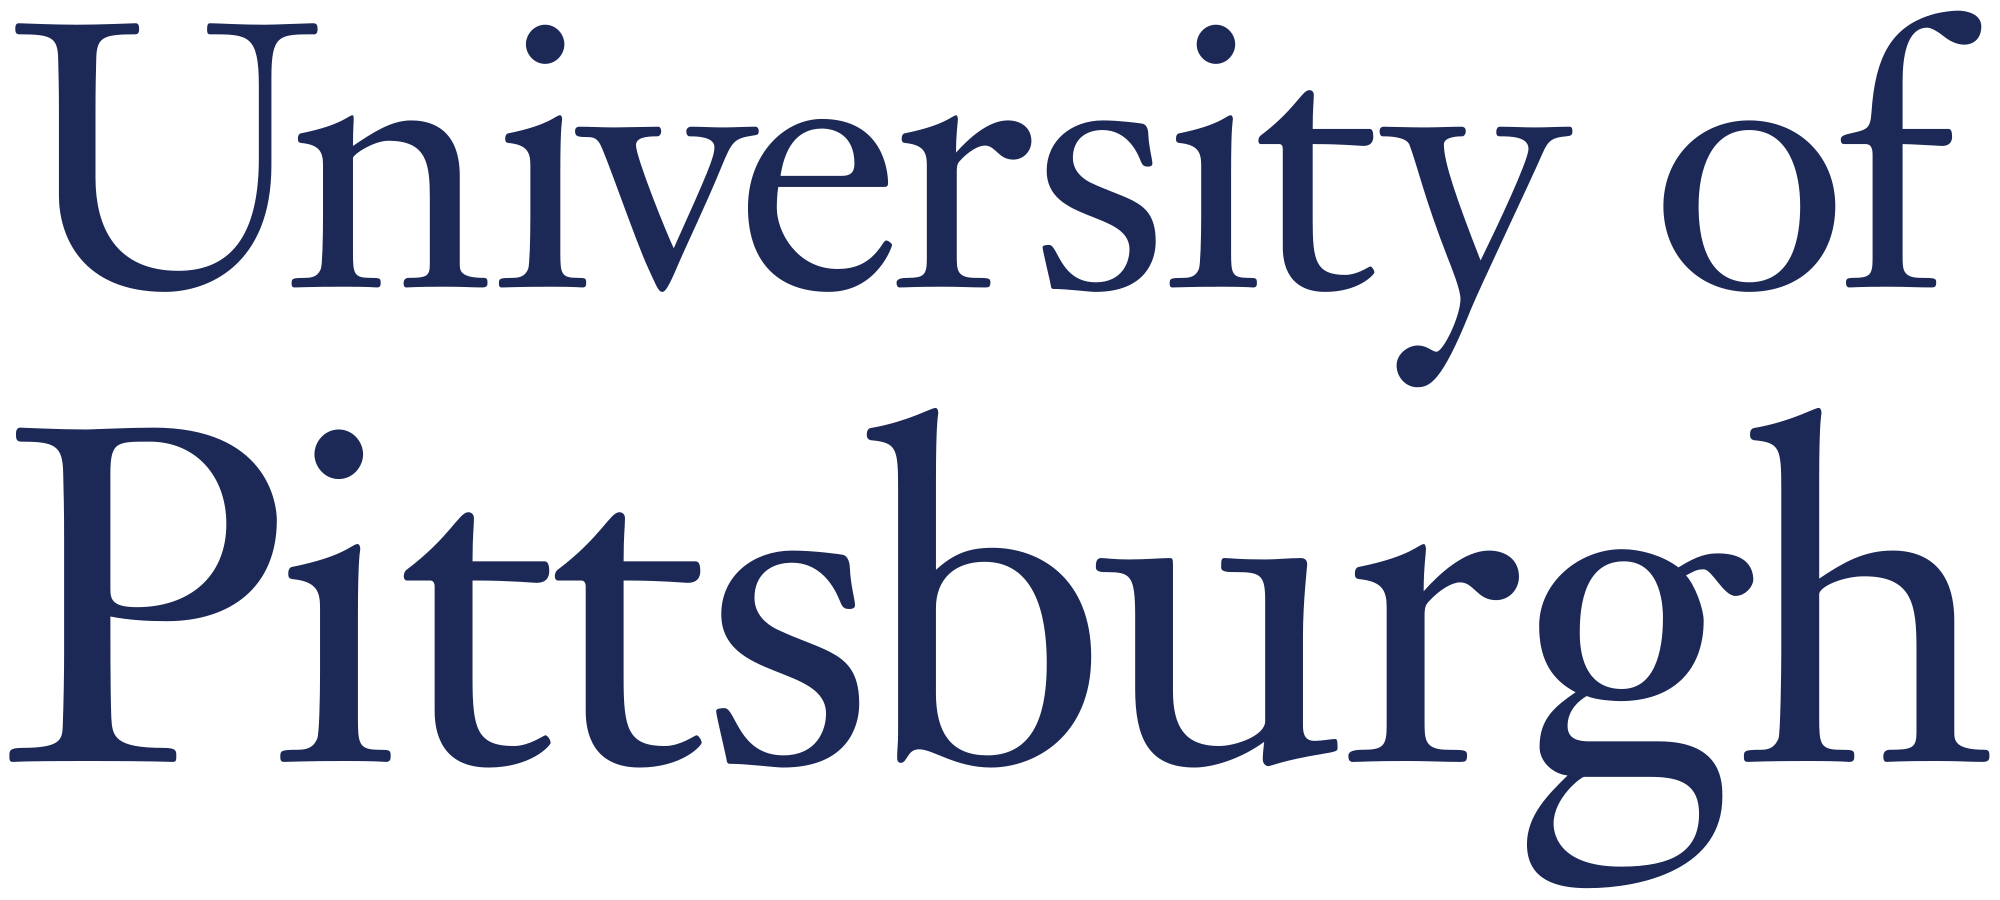 University of Pittsburgh Logo - File:University of Pittsburgh wordmark.svg - Wikimedia Commons